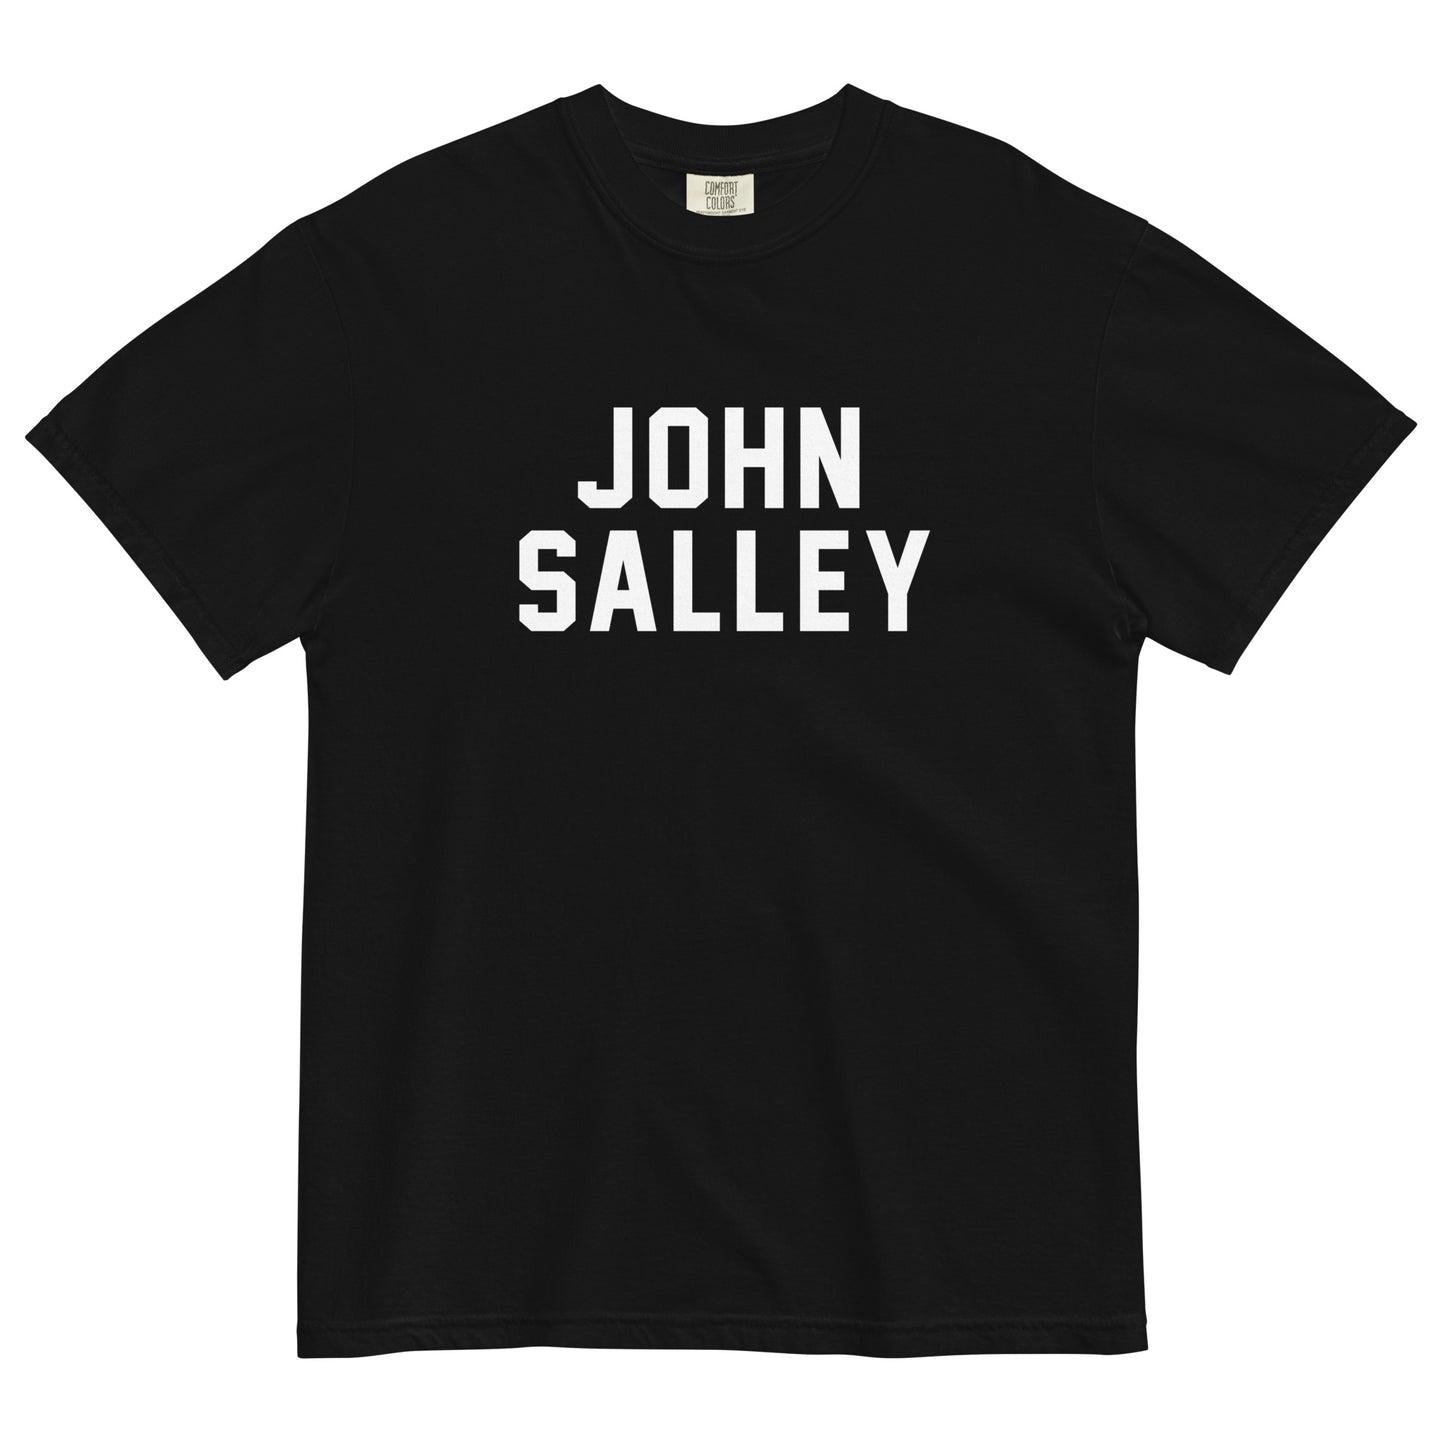 JOHN SALLEY